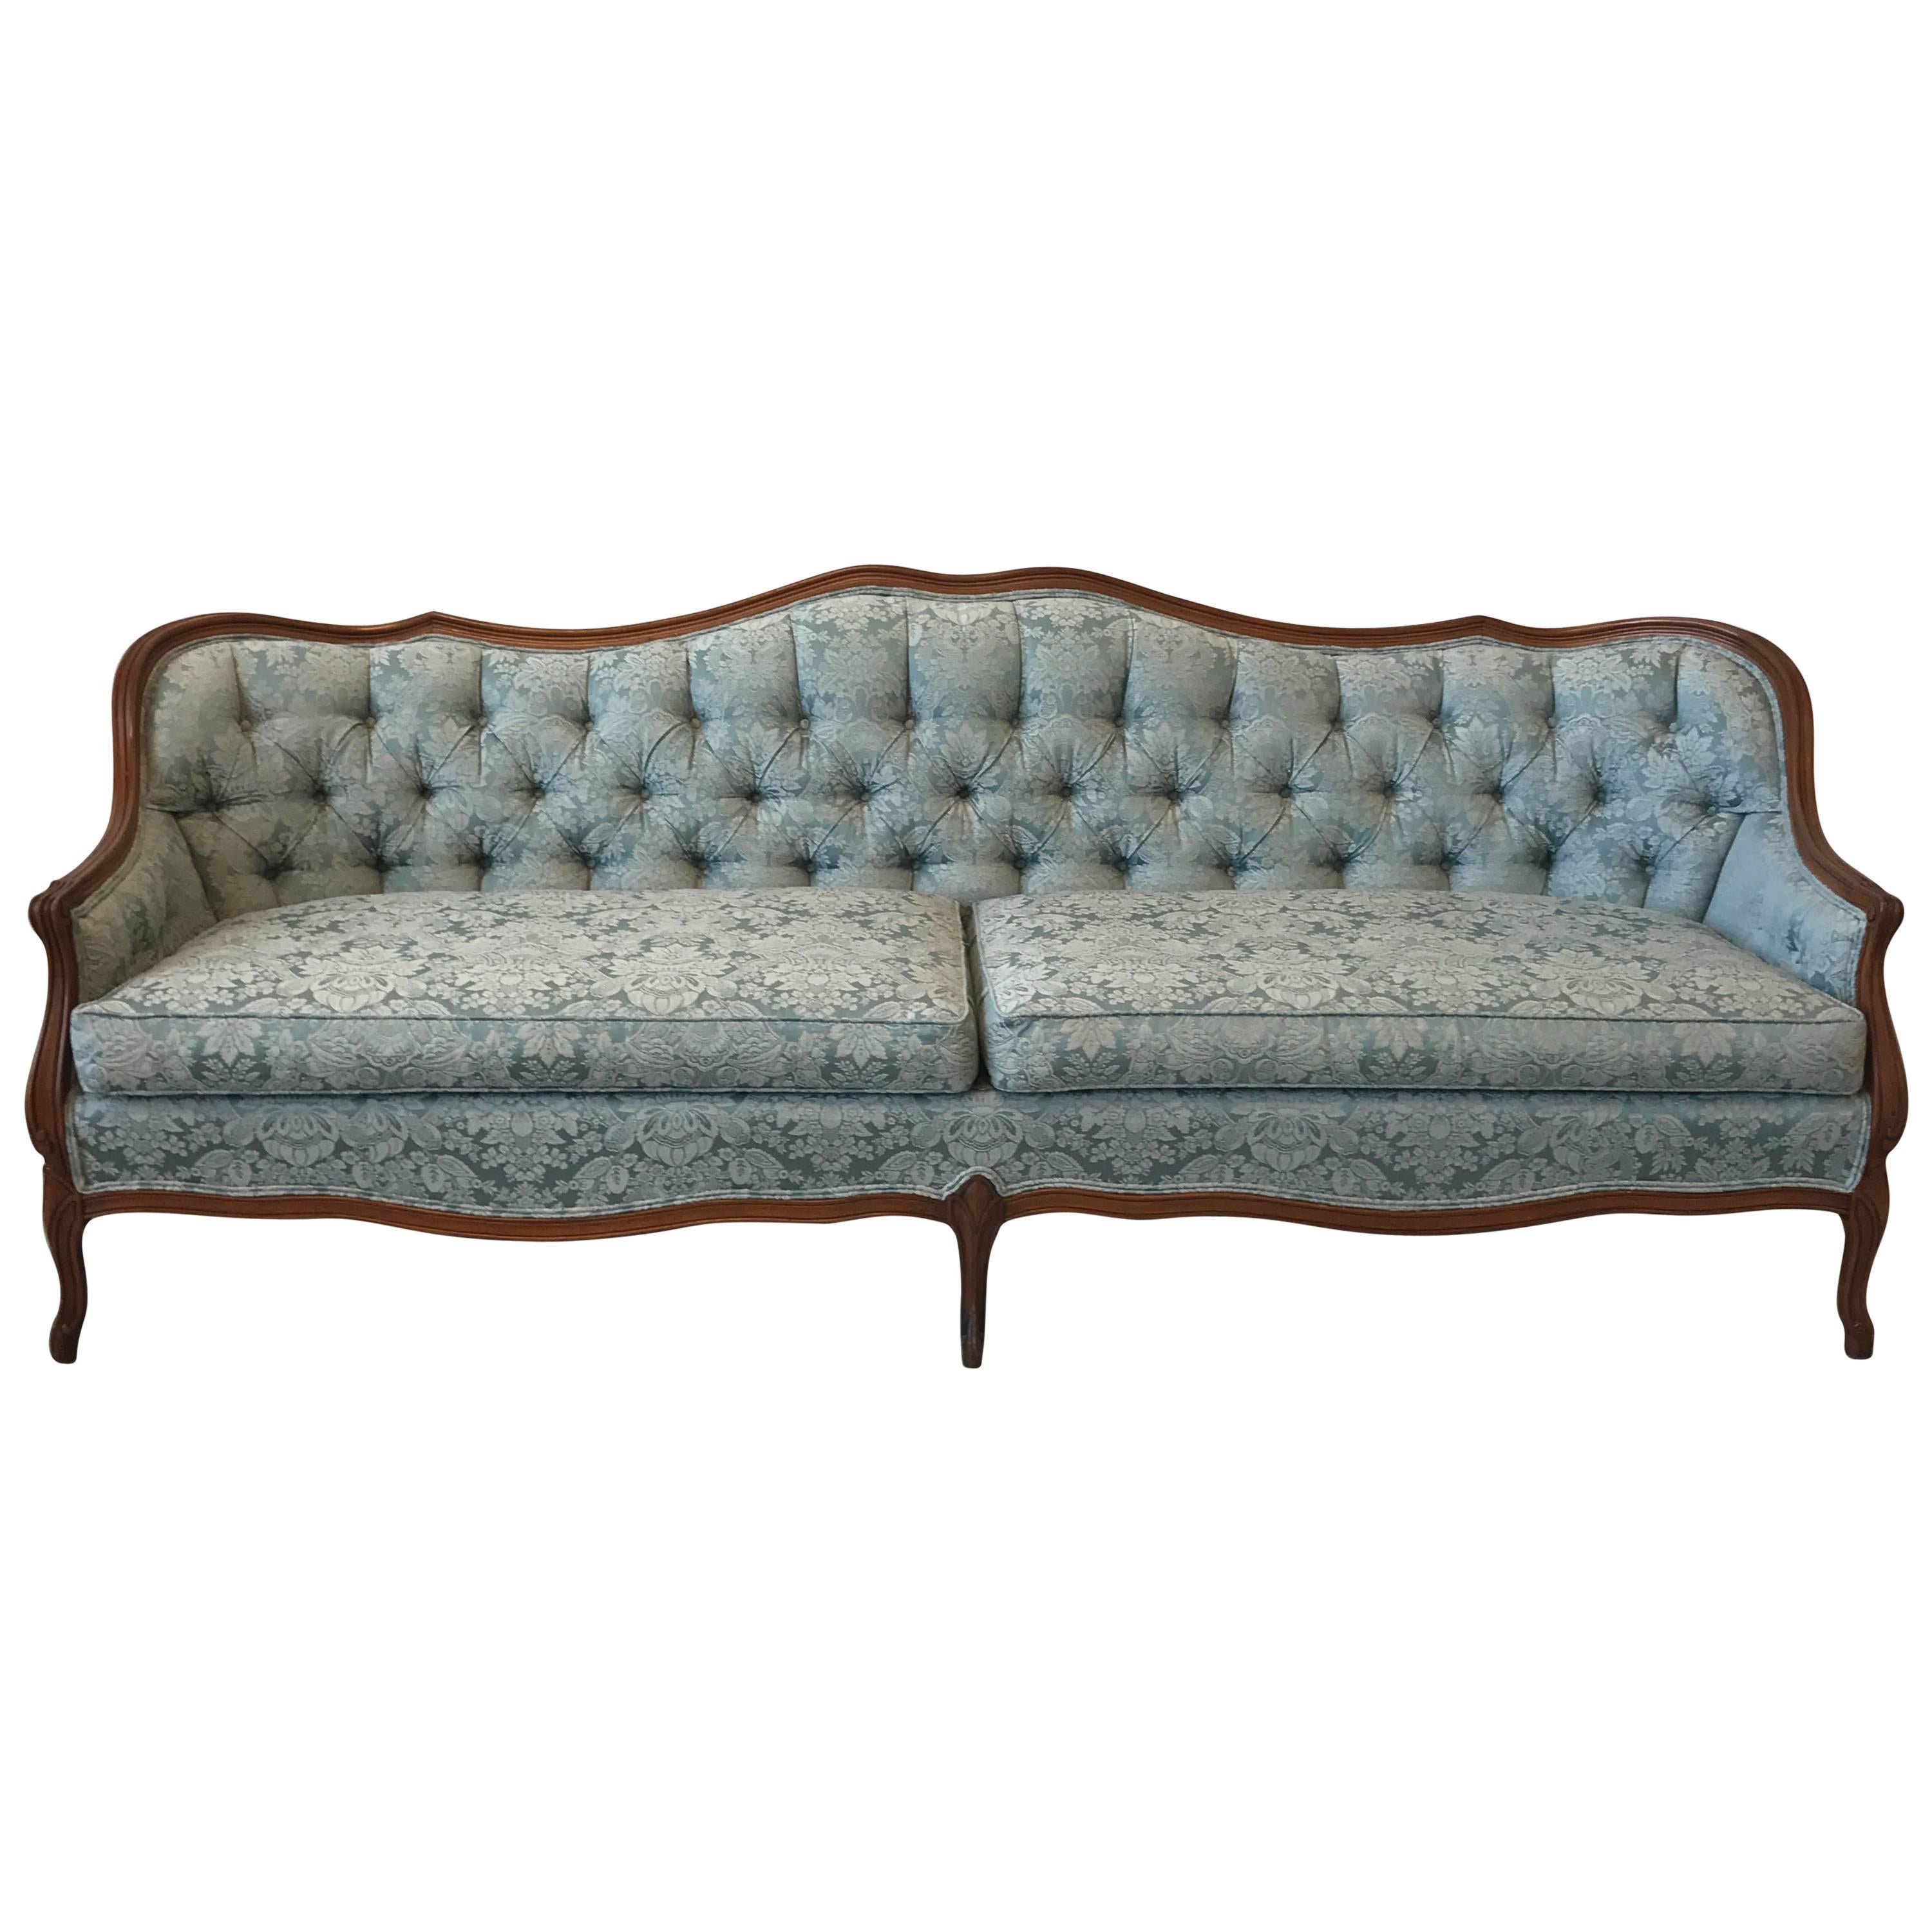 1940s French Blue Damask Tufted Sofa with Oak Frame Border